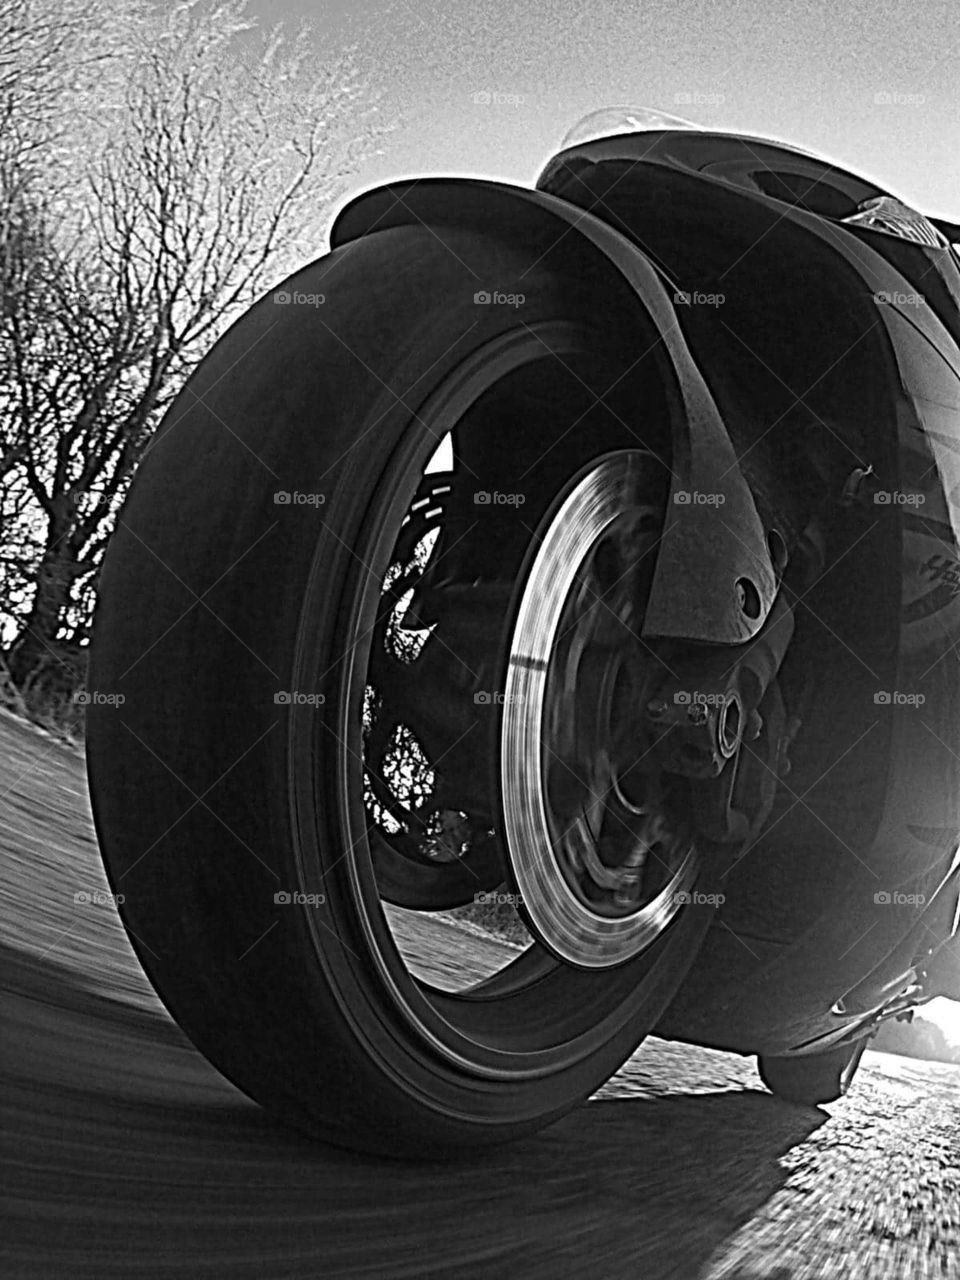 motorcycle wheel at speed road